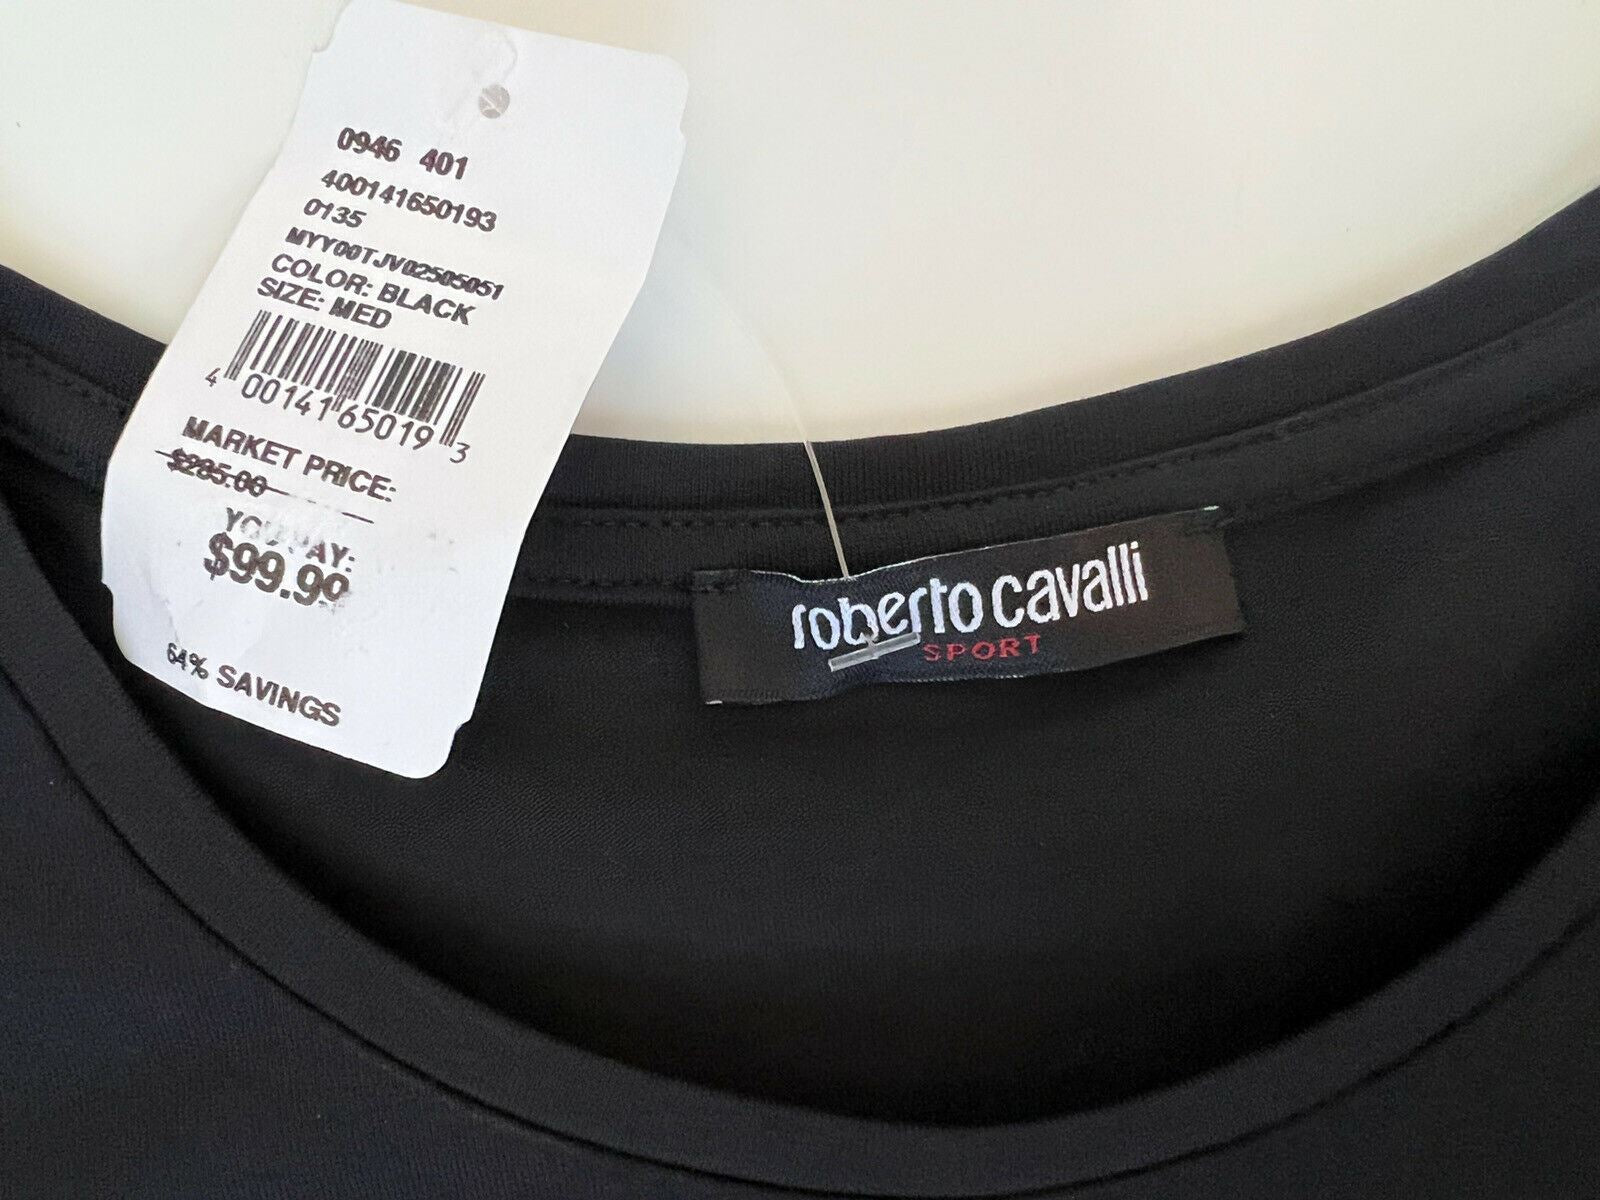 NWT $285 Roberto Cavalli Crewneck Stretch Women’s Black T-shirt Medium Italy